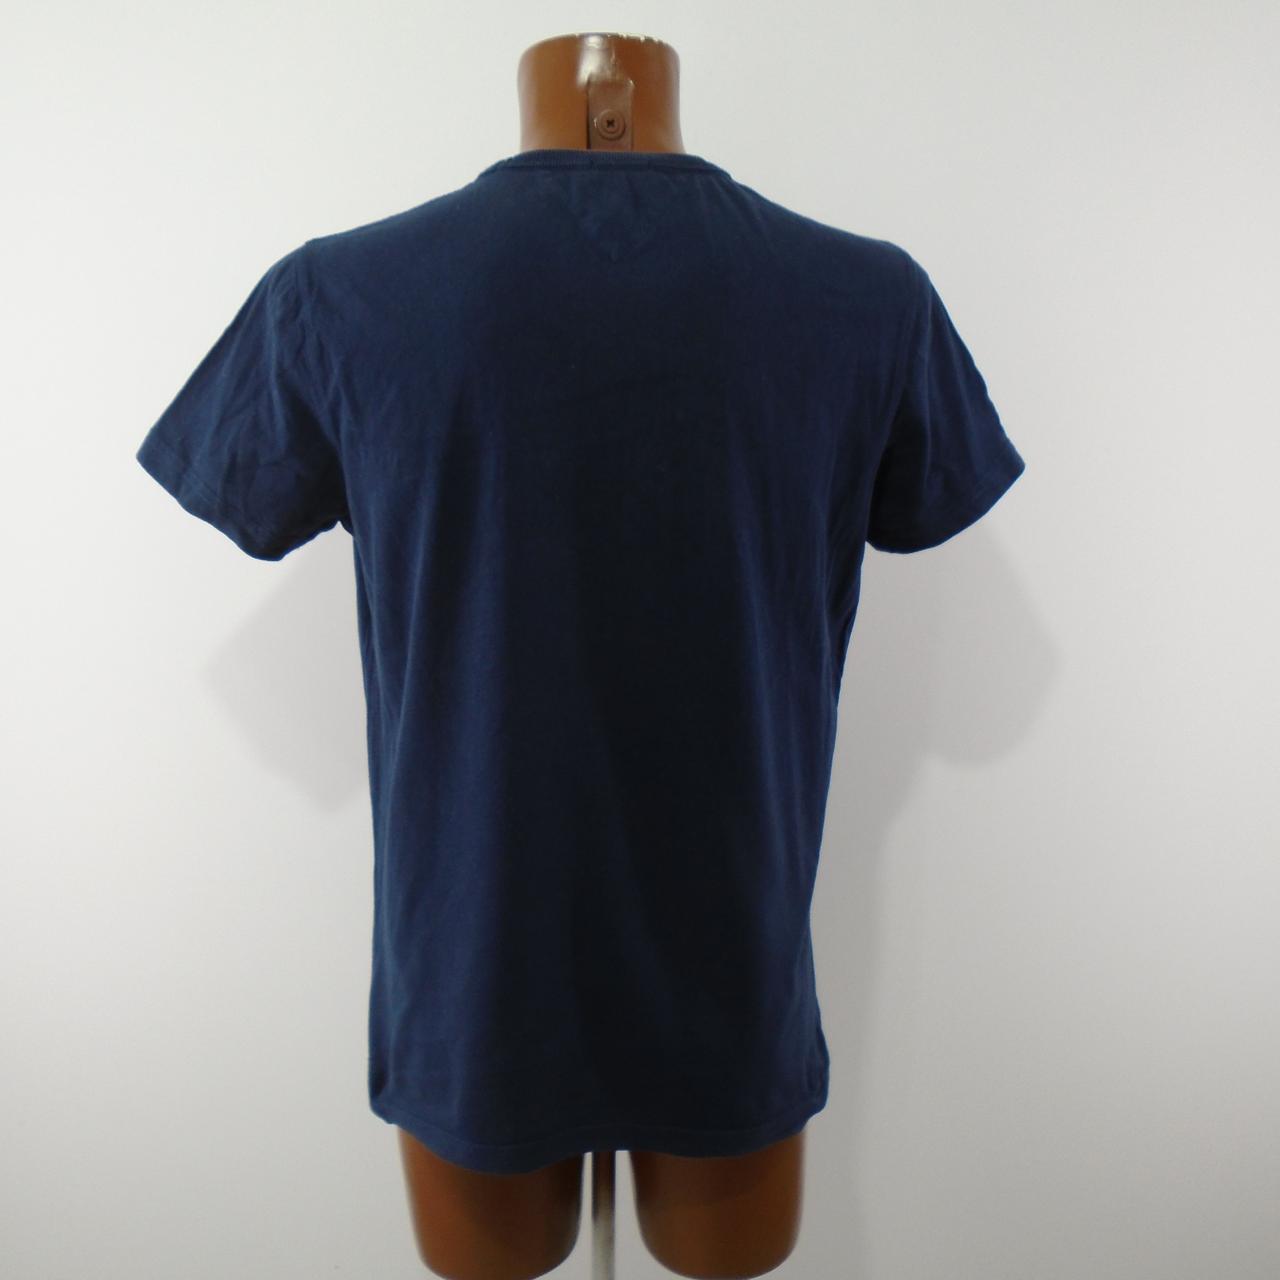 Camiseta de hombre Tommy Hilfiger. Azul oscuro. L.Usado. Bien